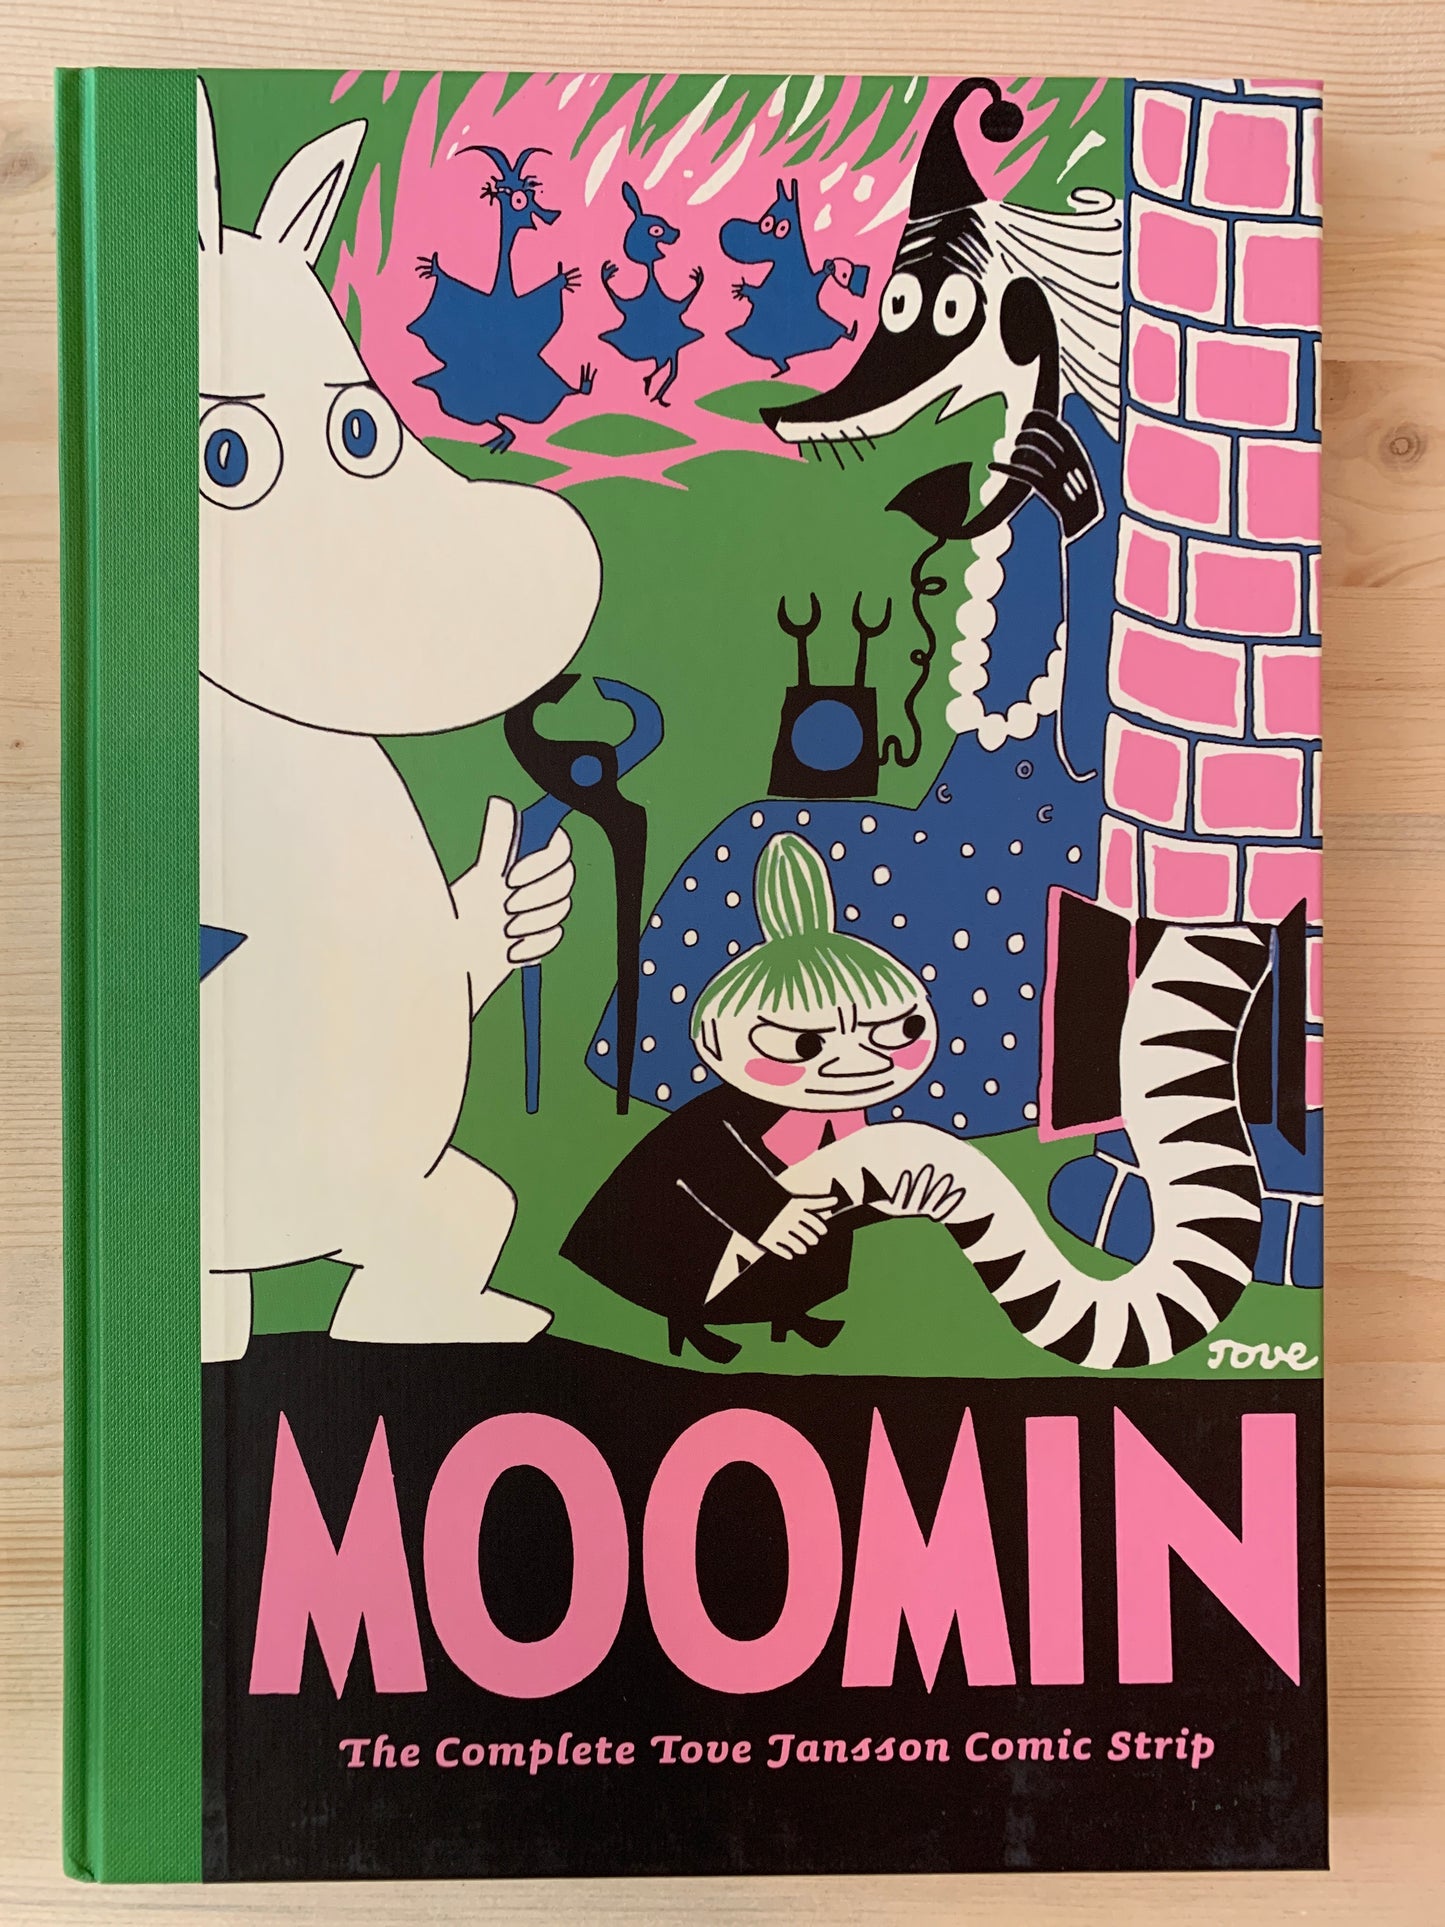 Moomin: The Complete Tove Jansson Comic Strip Volume 2